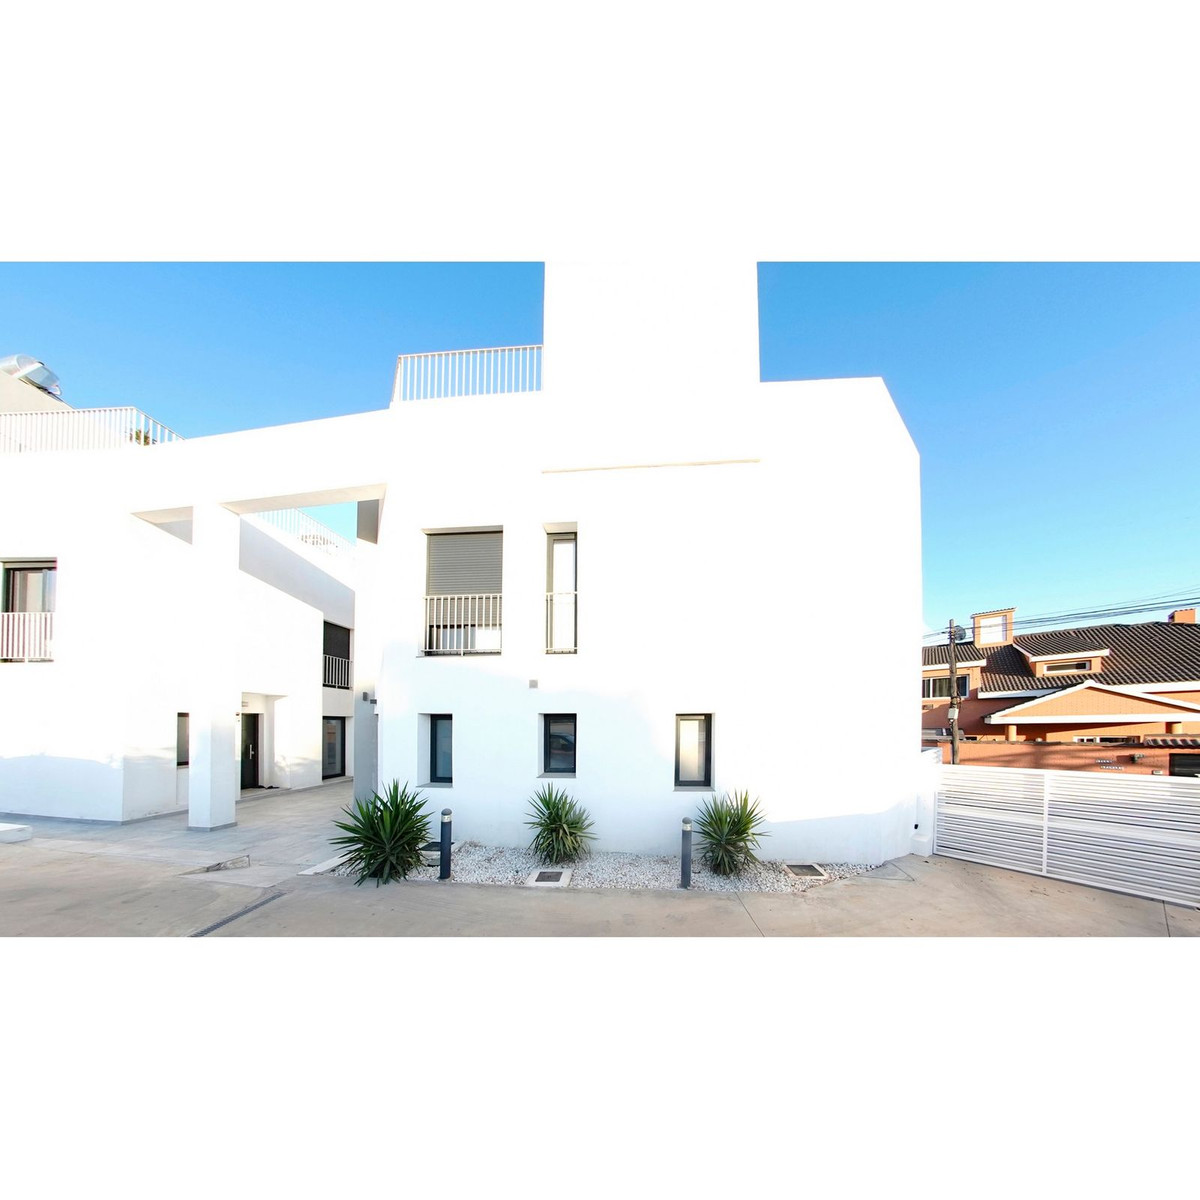 						Villa  Semi Detached
													for sale 
																			 in Torreblanca
					